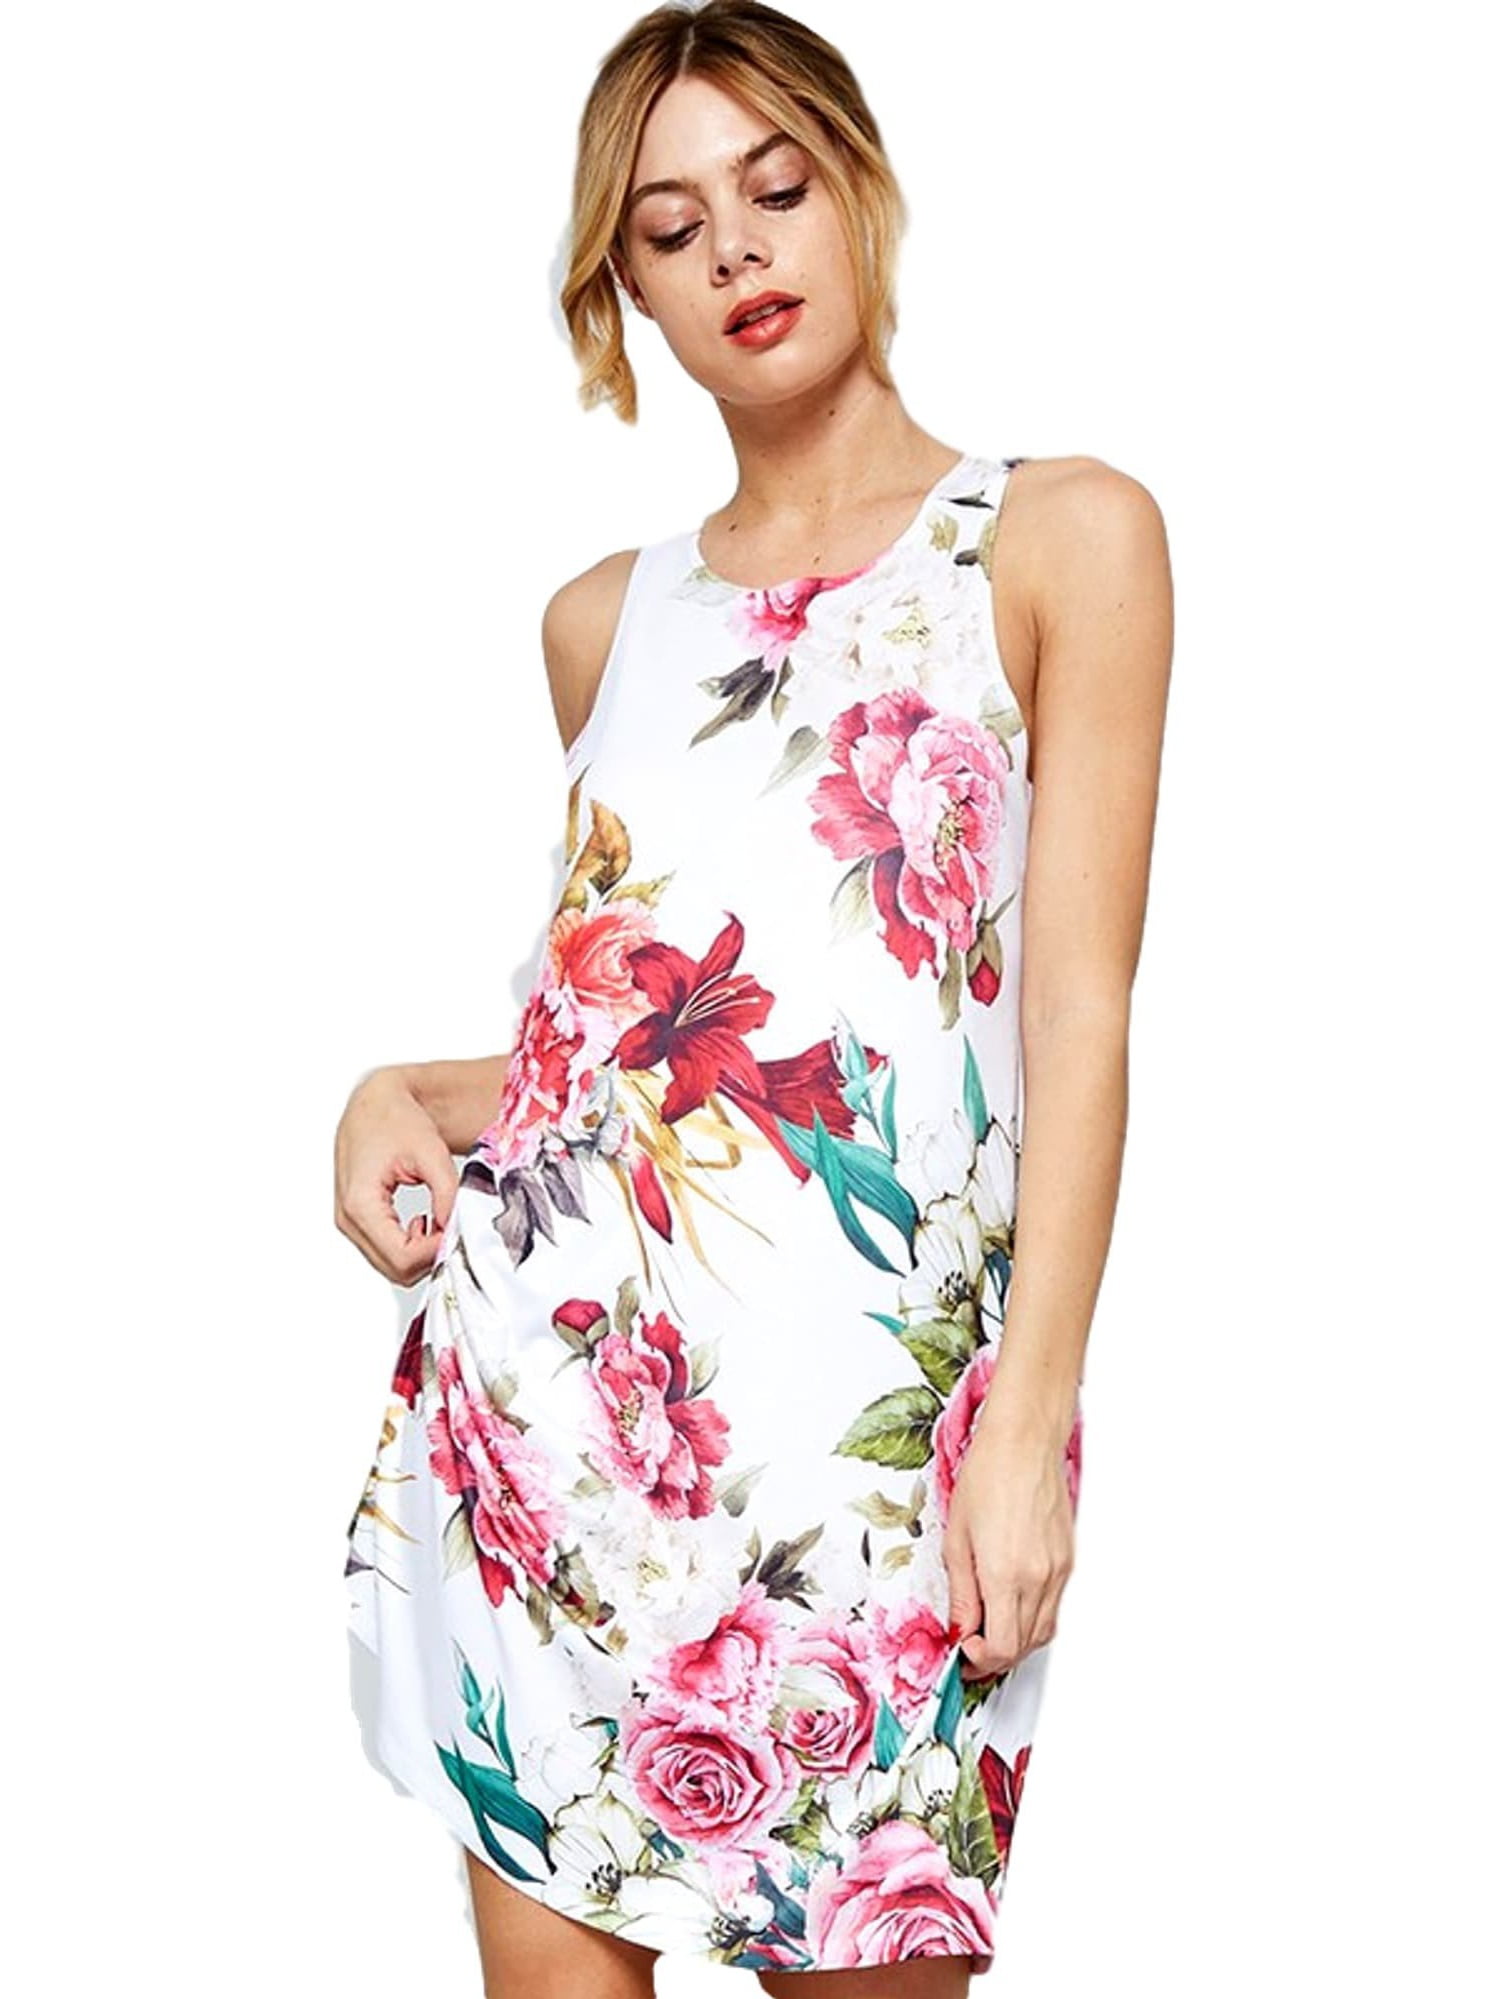 Promesa - Flower Print Sleevelesss Dress, White - Walmart.com - Walmart.com